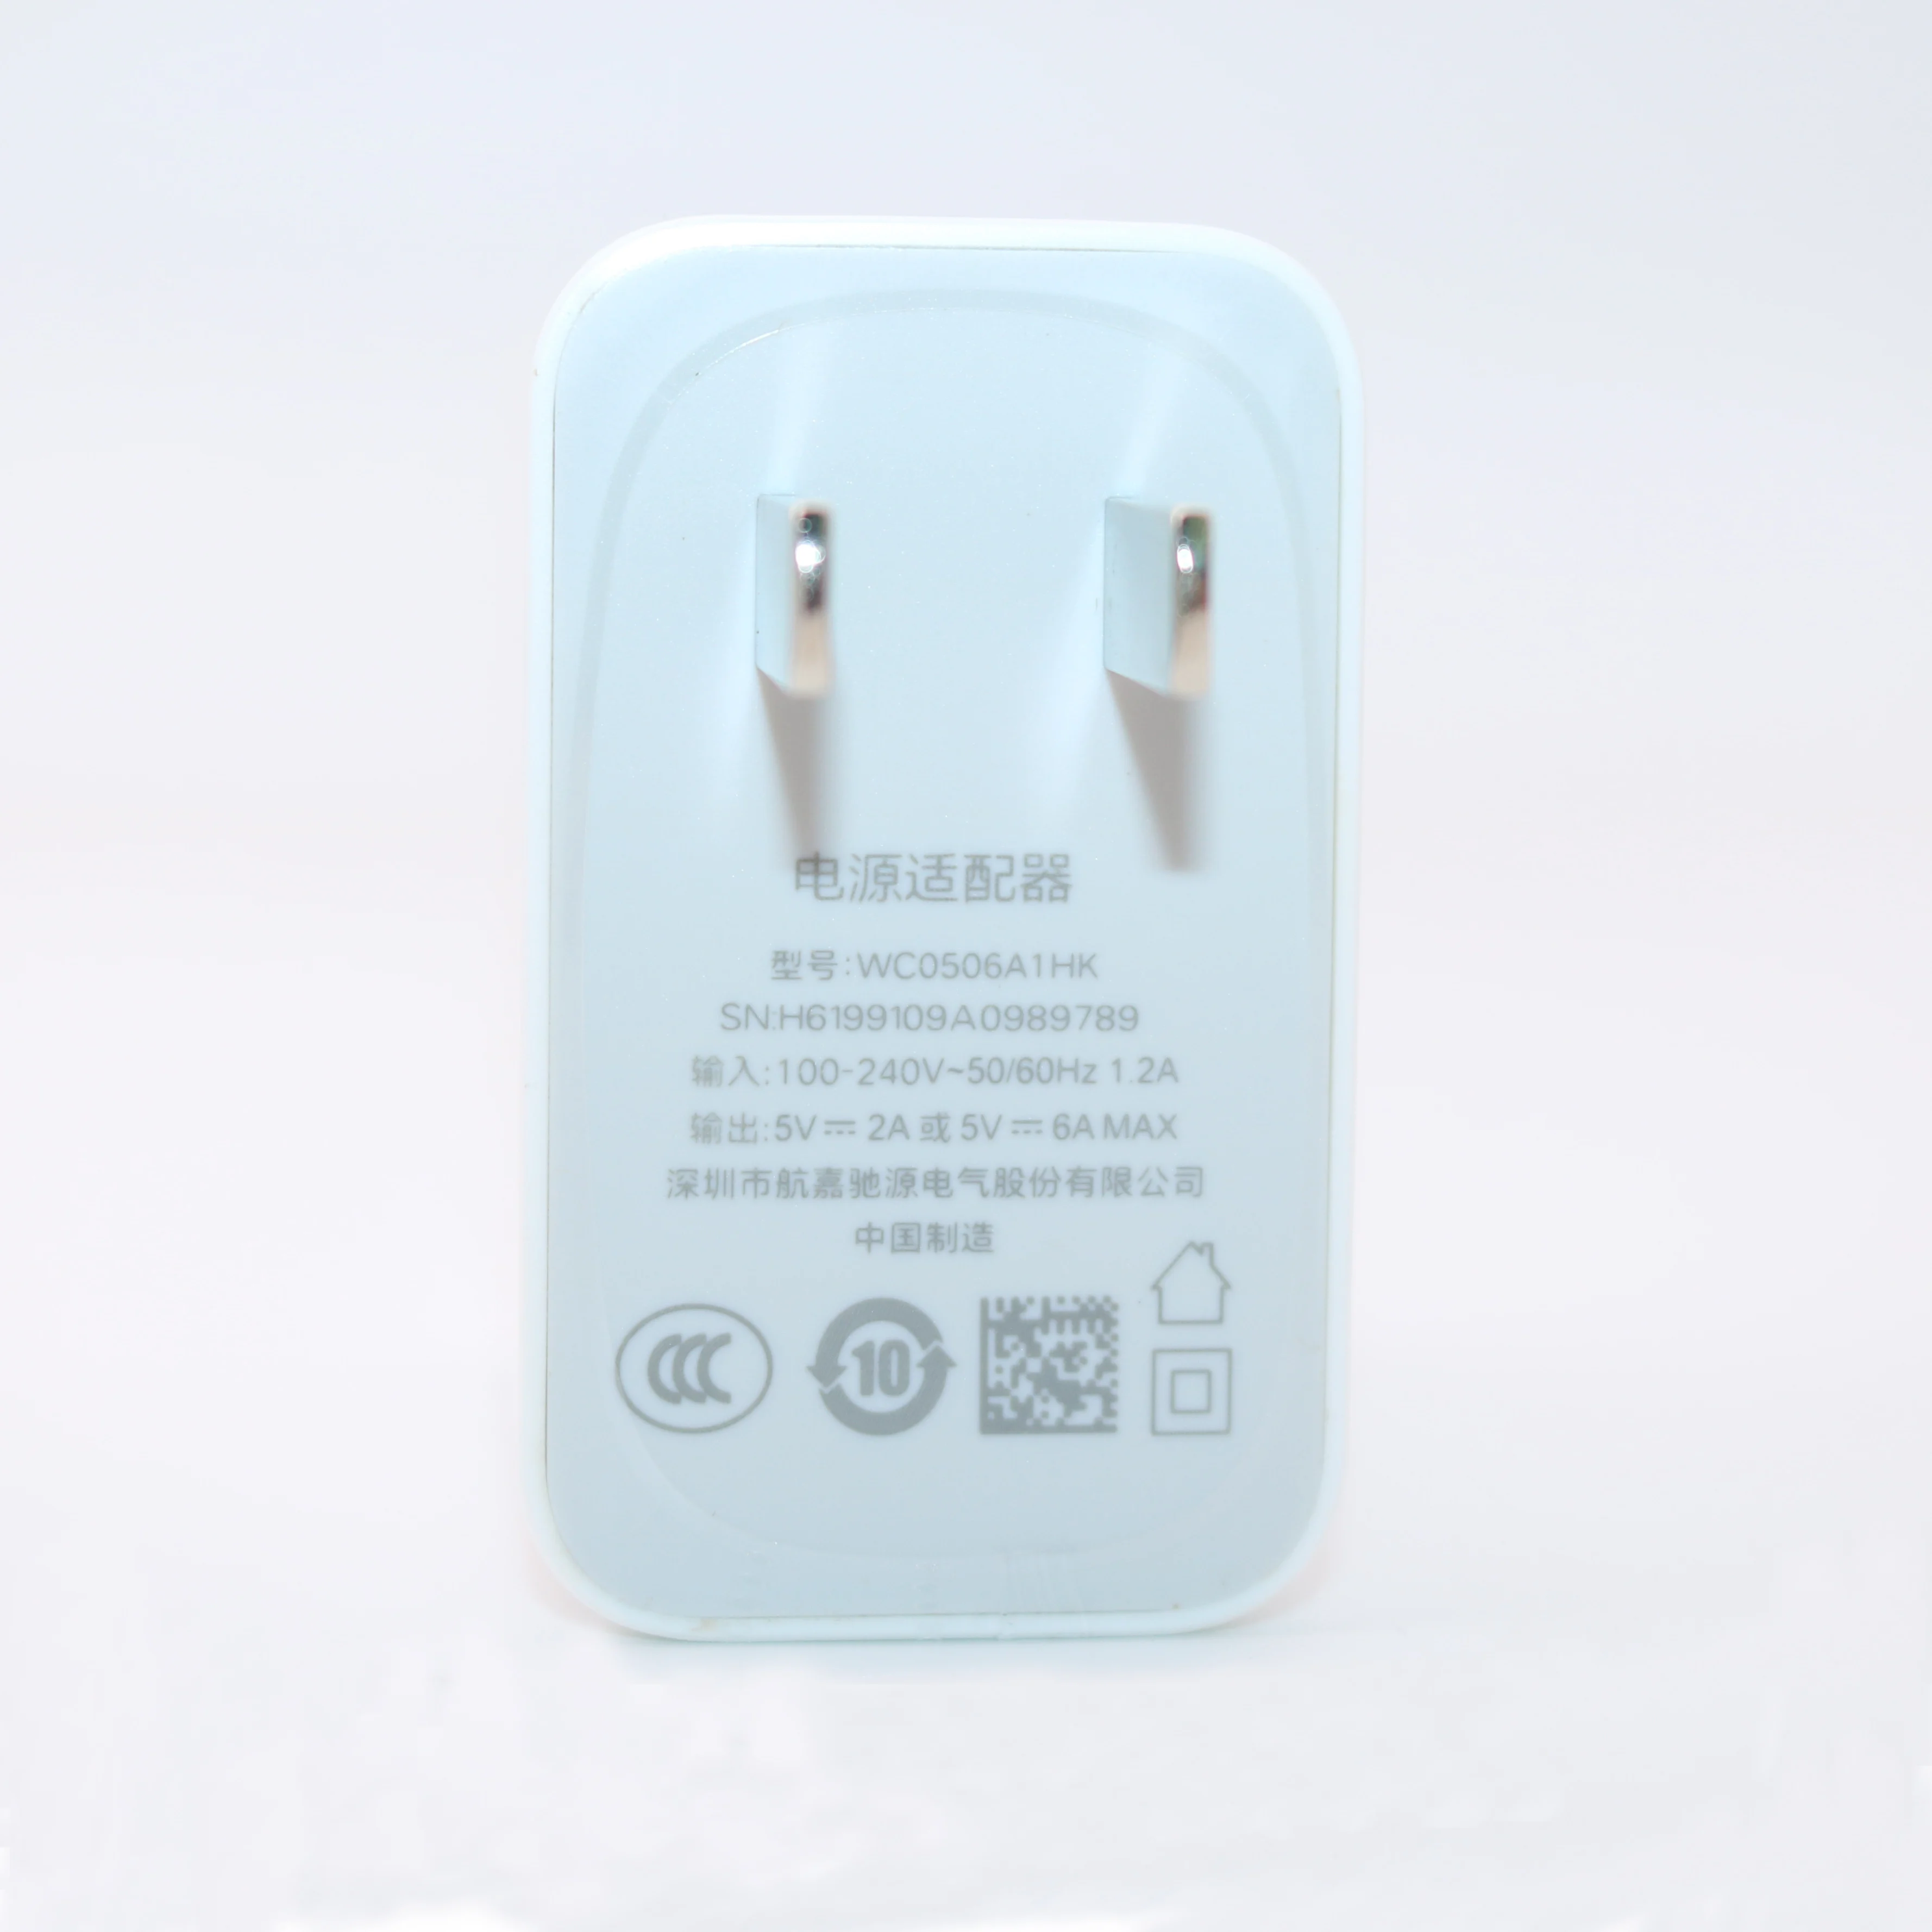 OnePlus Warp Charge 30 адаптер питания Warp 30 Вт ЕС зарядное устройство ЕС США зарядное устройство кабель Быстрая зарядка 30 Вт для OnePlus 7 7T Pro